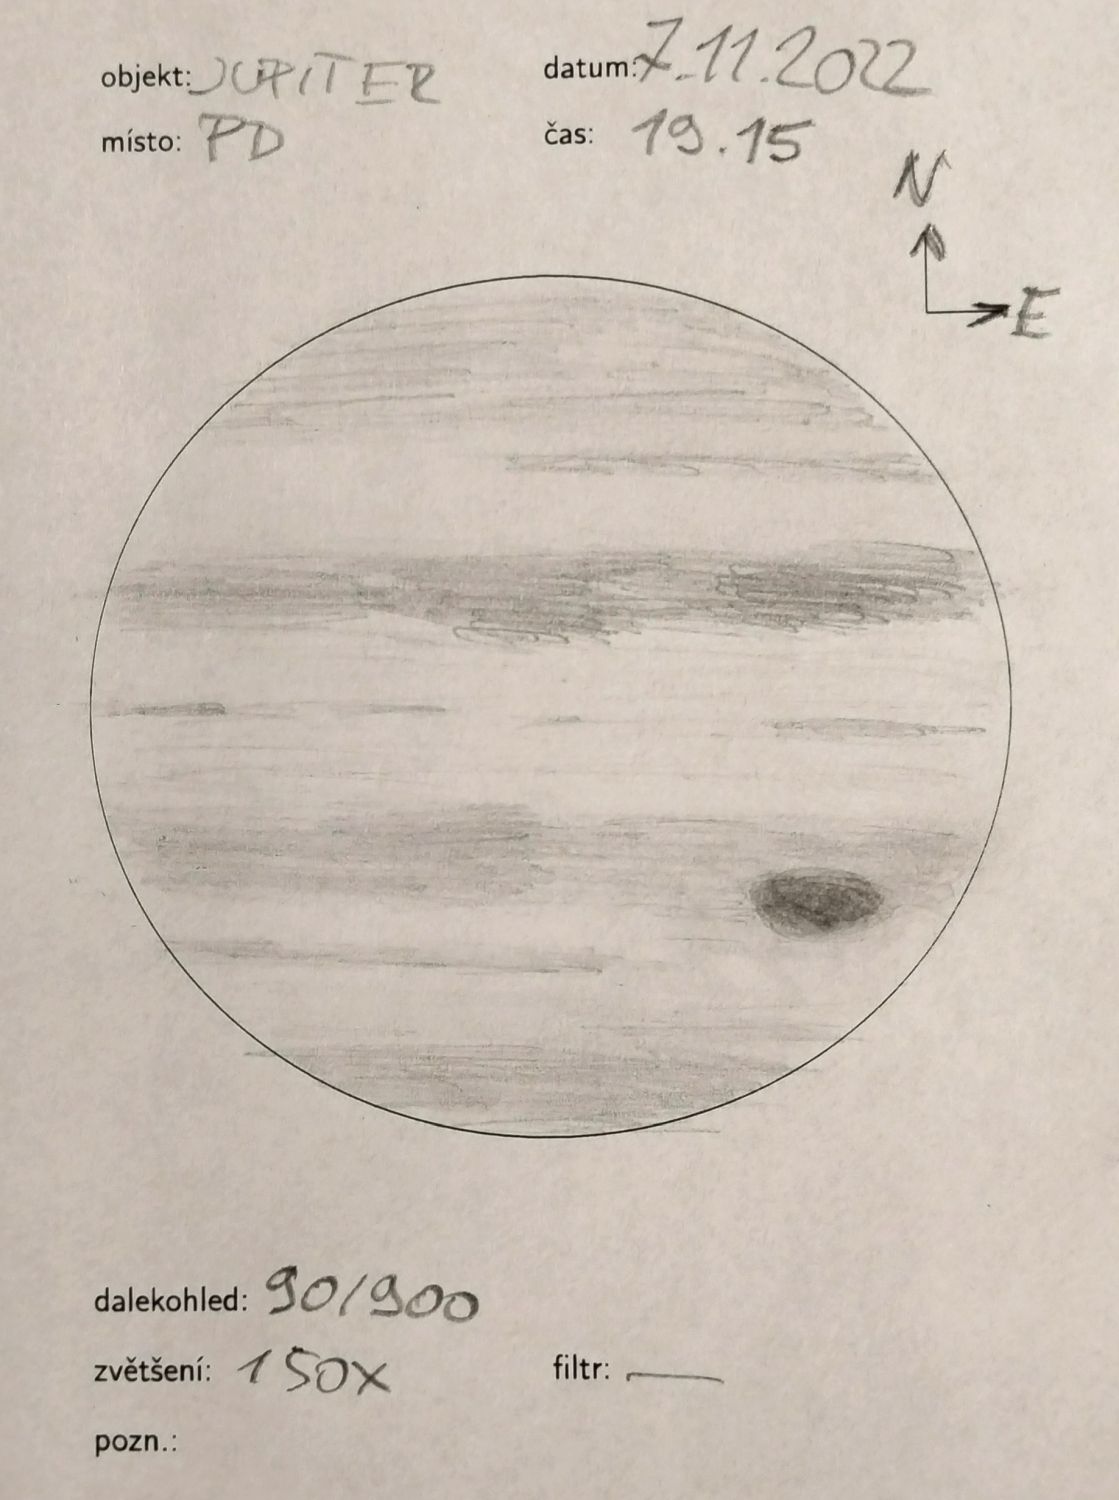 Jupiter 7-11-2022 w.jpg